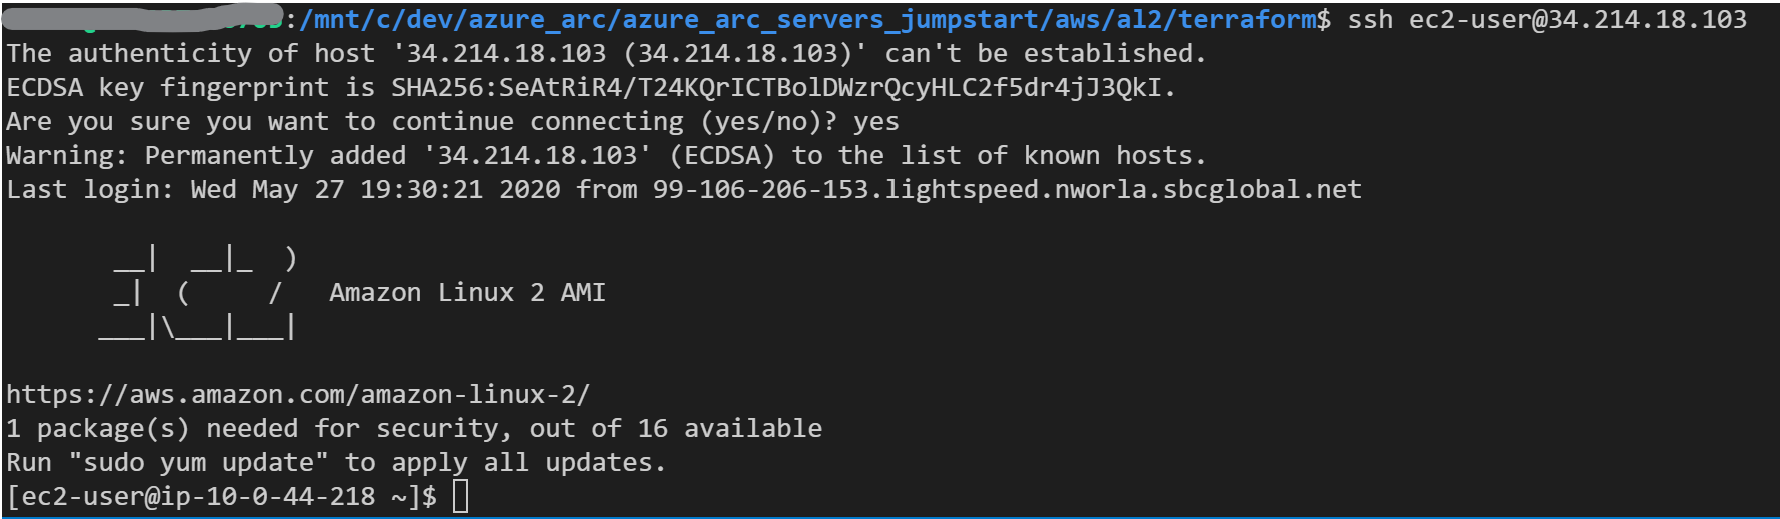 A screenshot of an SSH key connecting to an EC2 server.